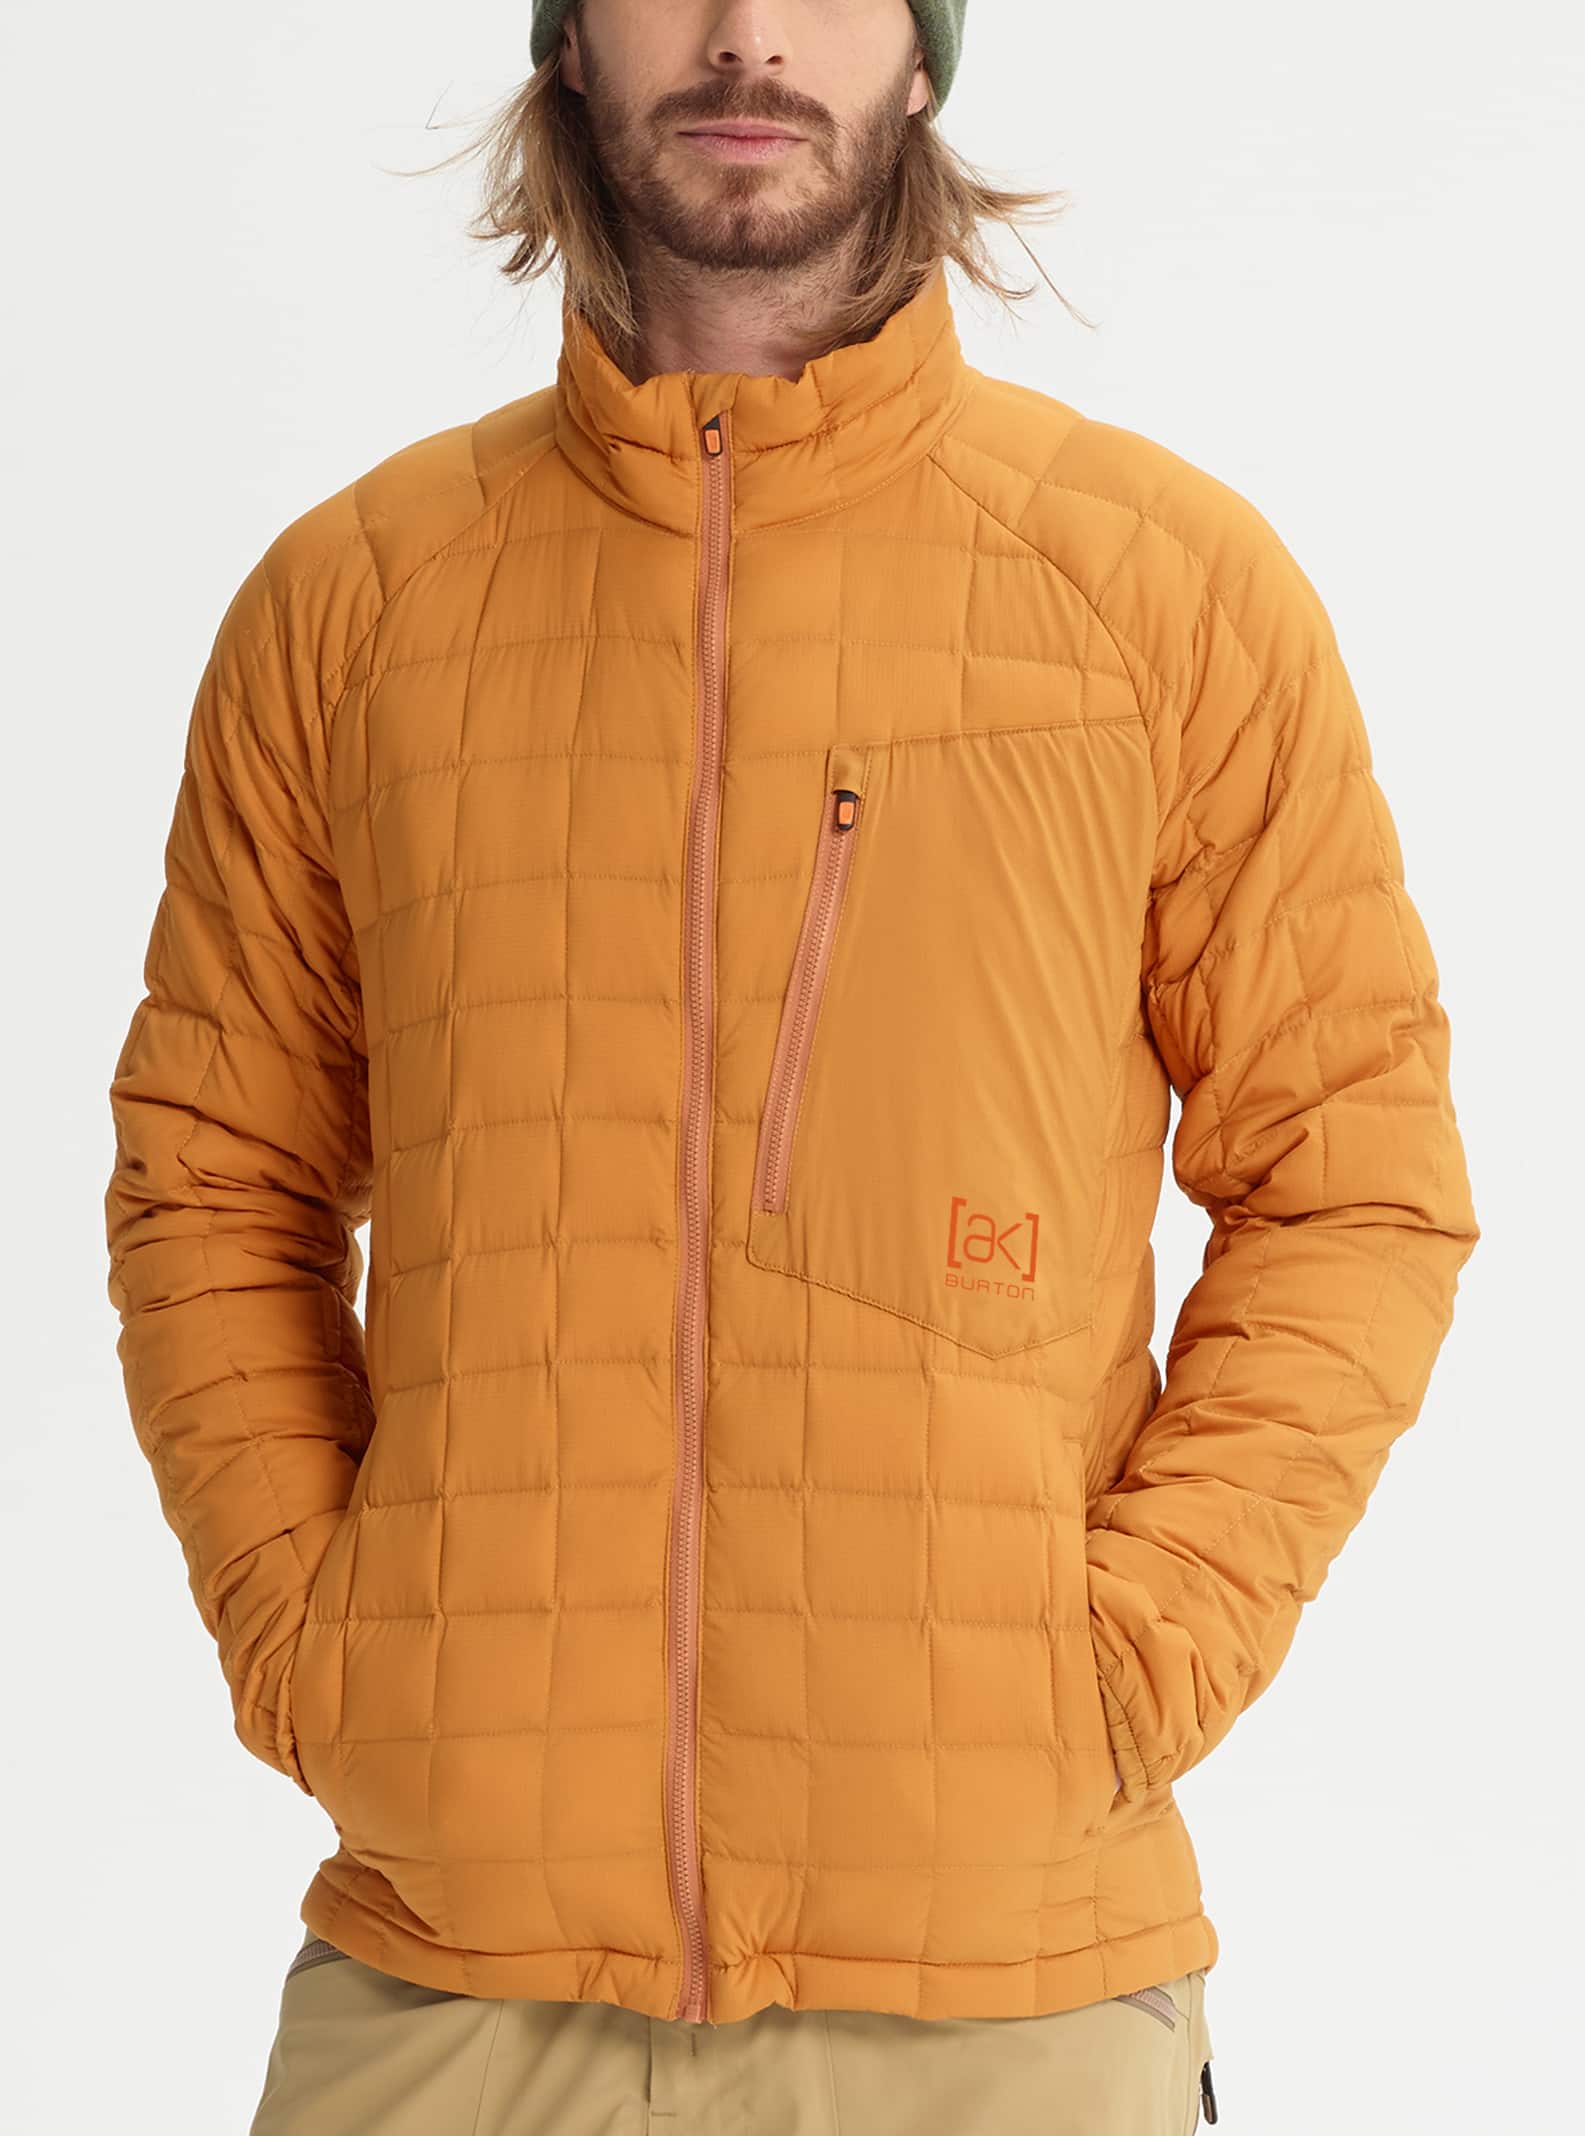 Men's Burton [ak]® BK Lite Down Jacket | Burton.com Winter 2019 US